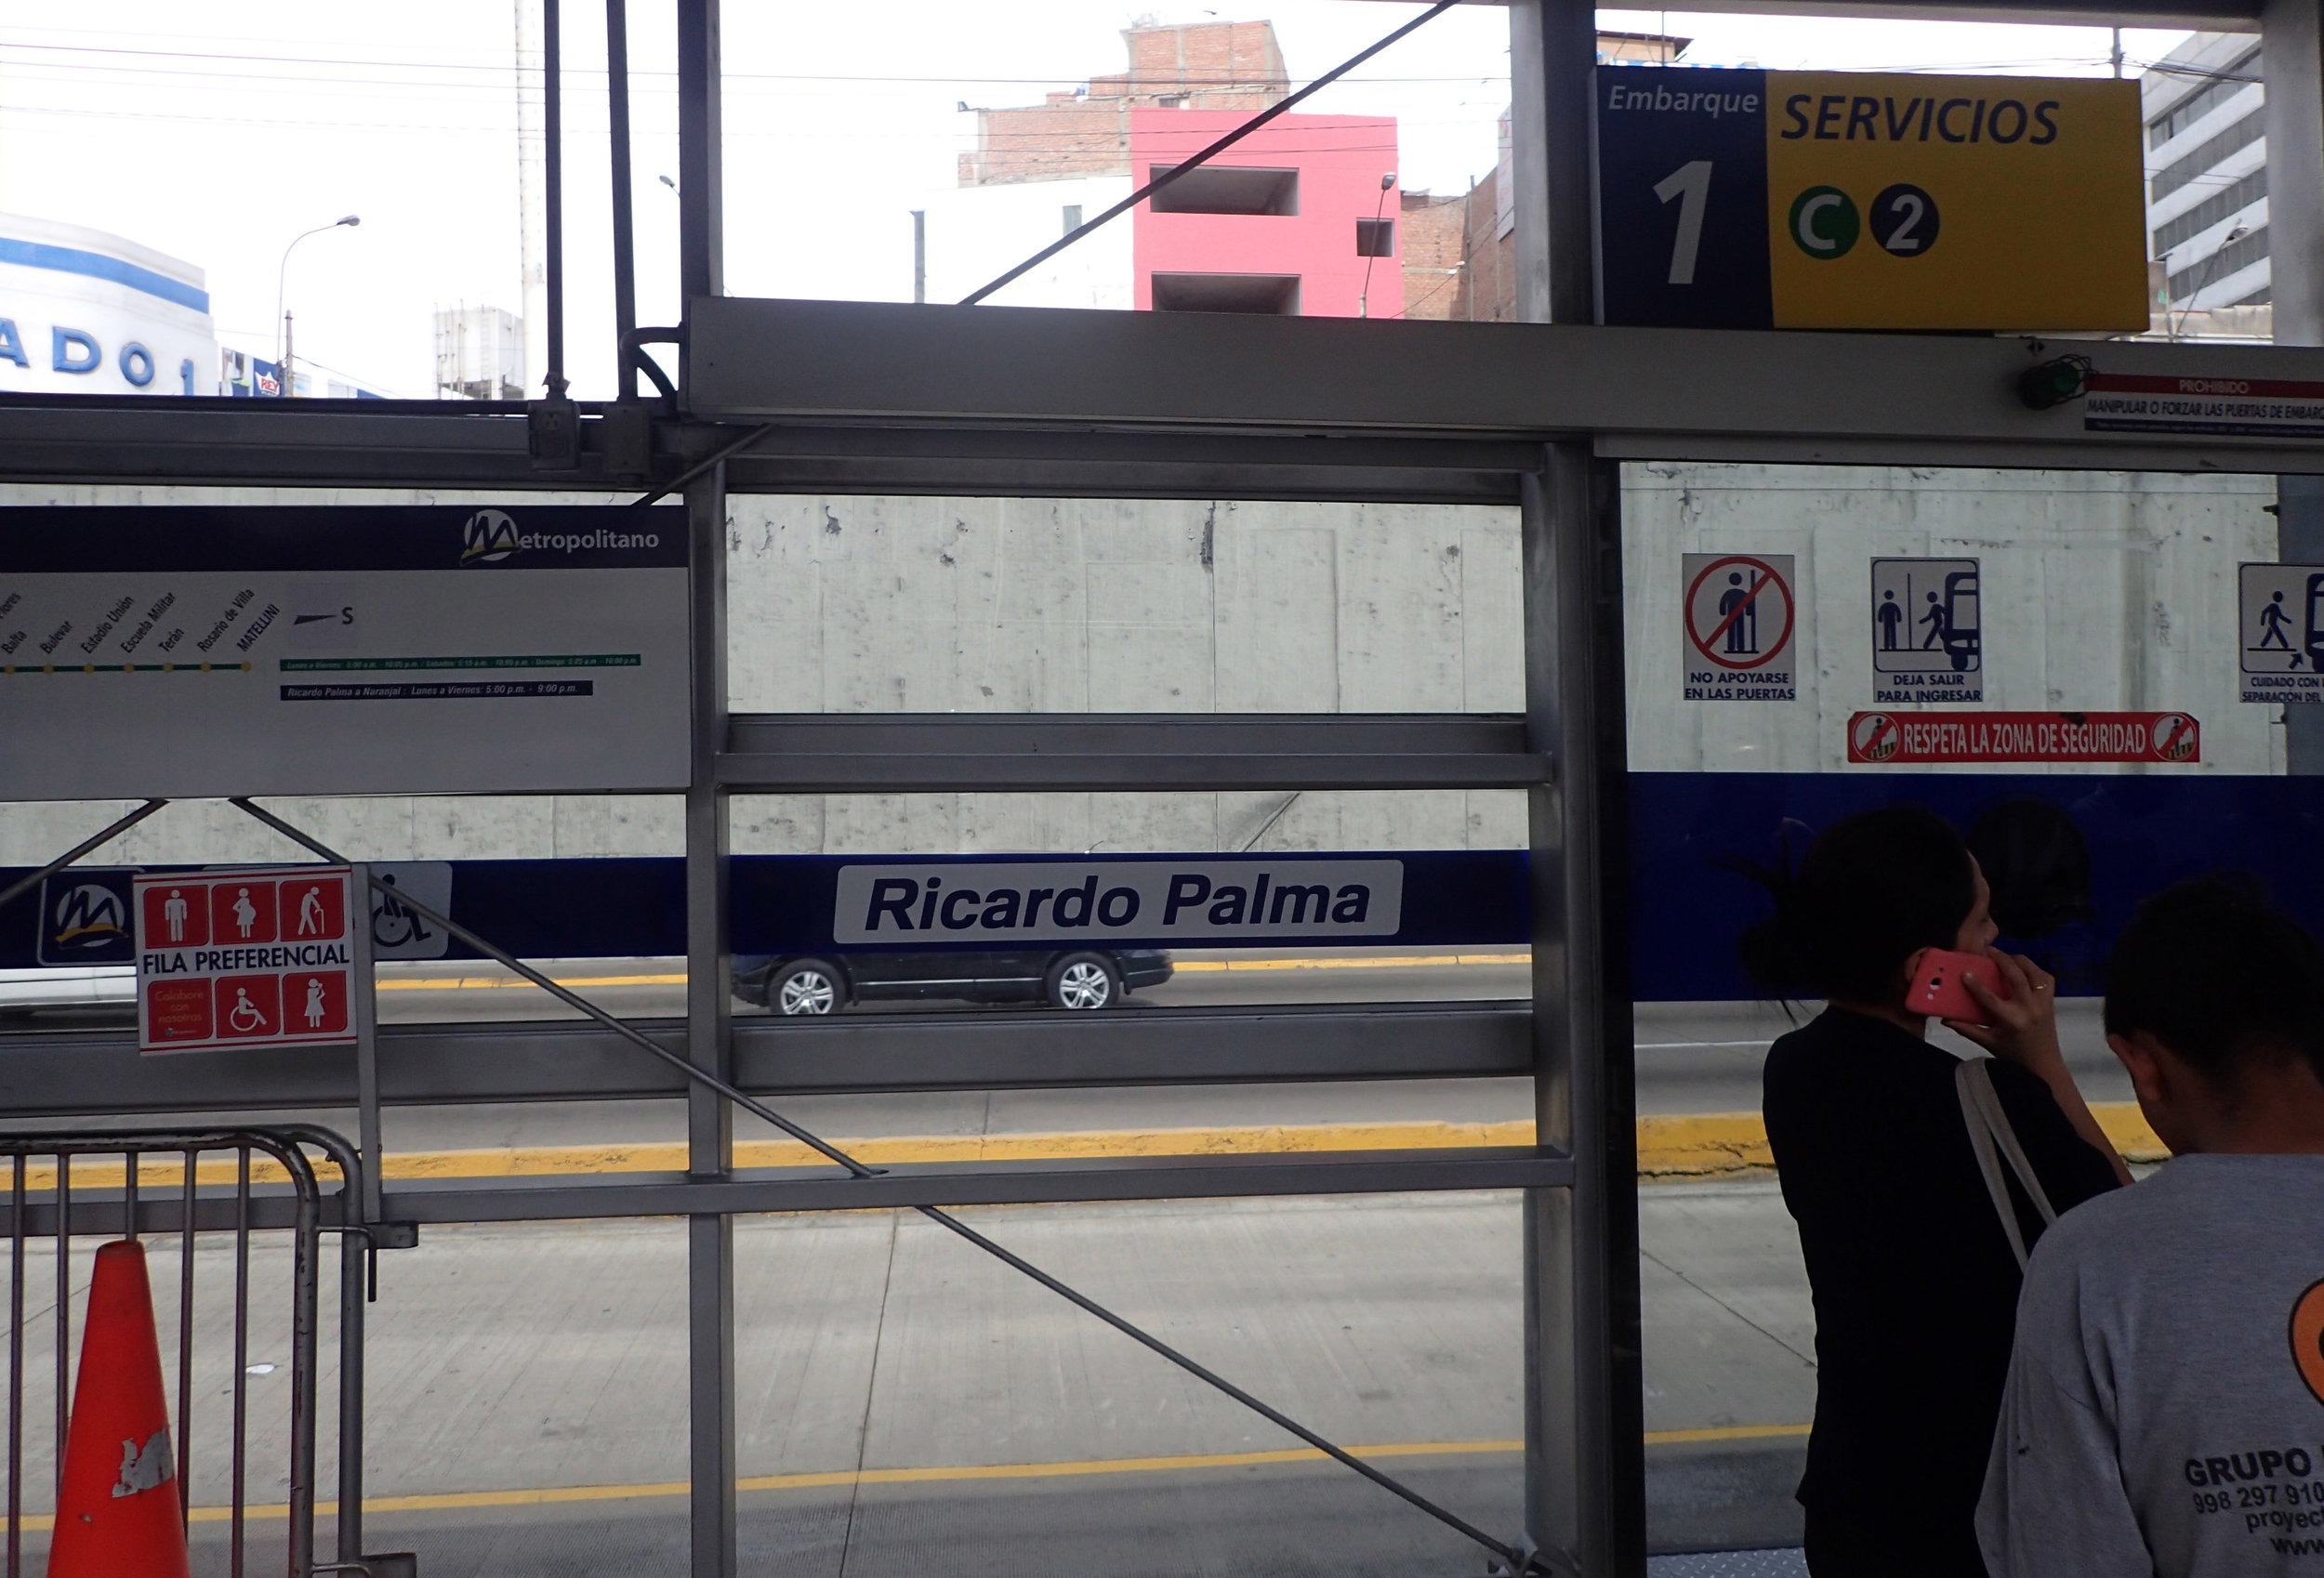 Ricardo Palma bus station-Metropolitano.jpg